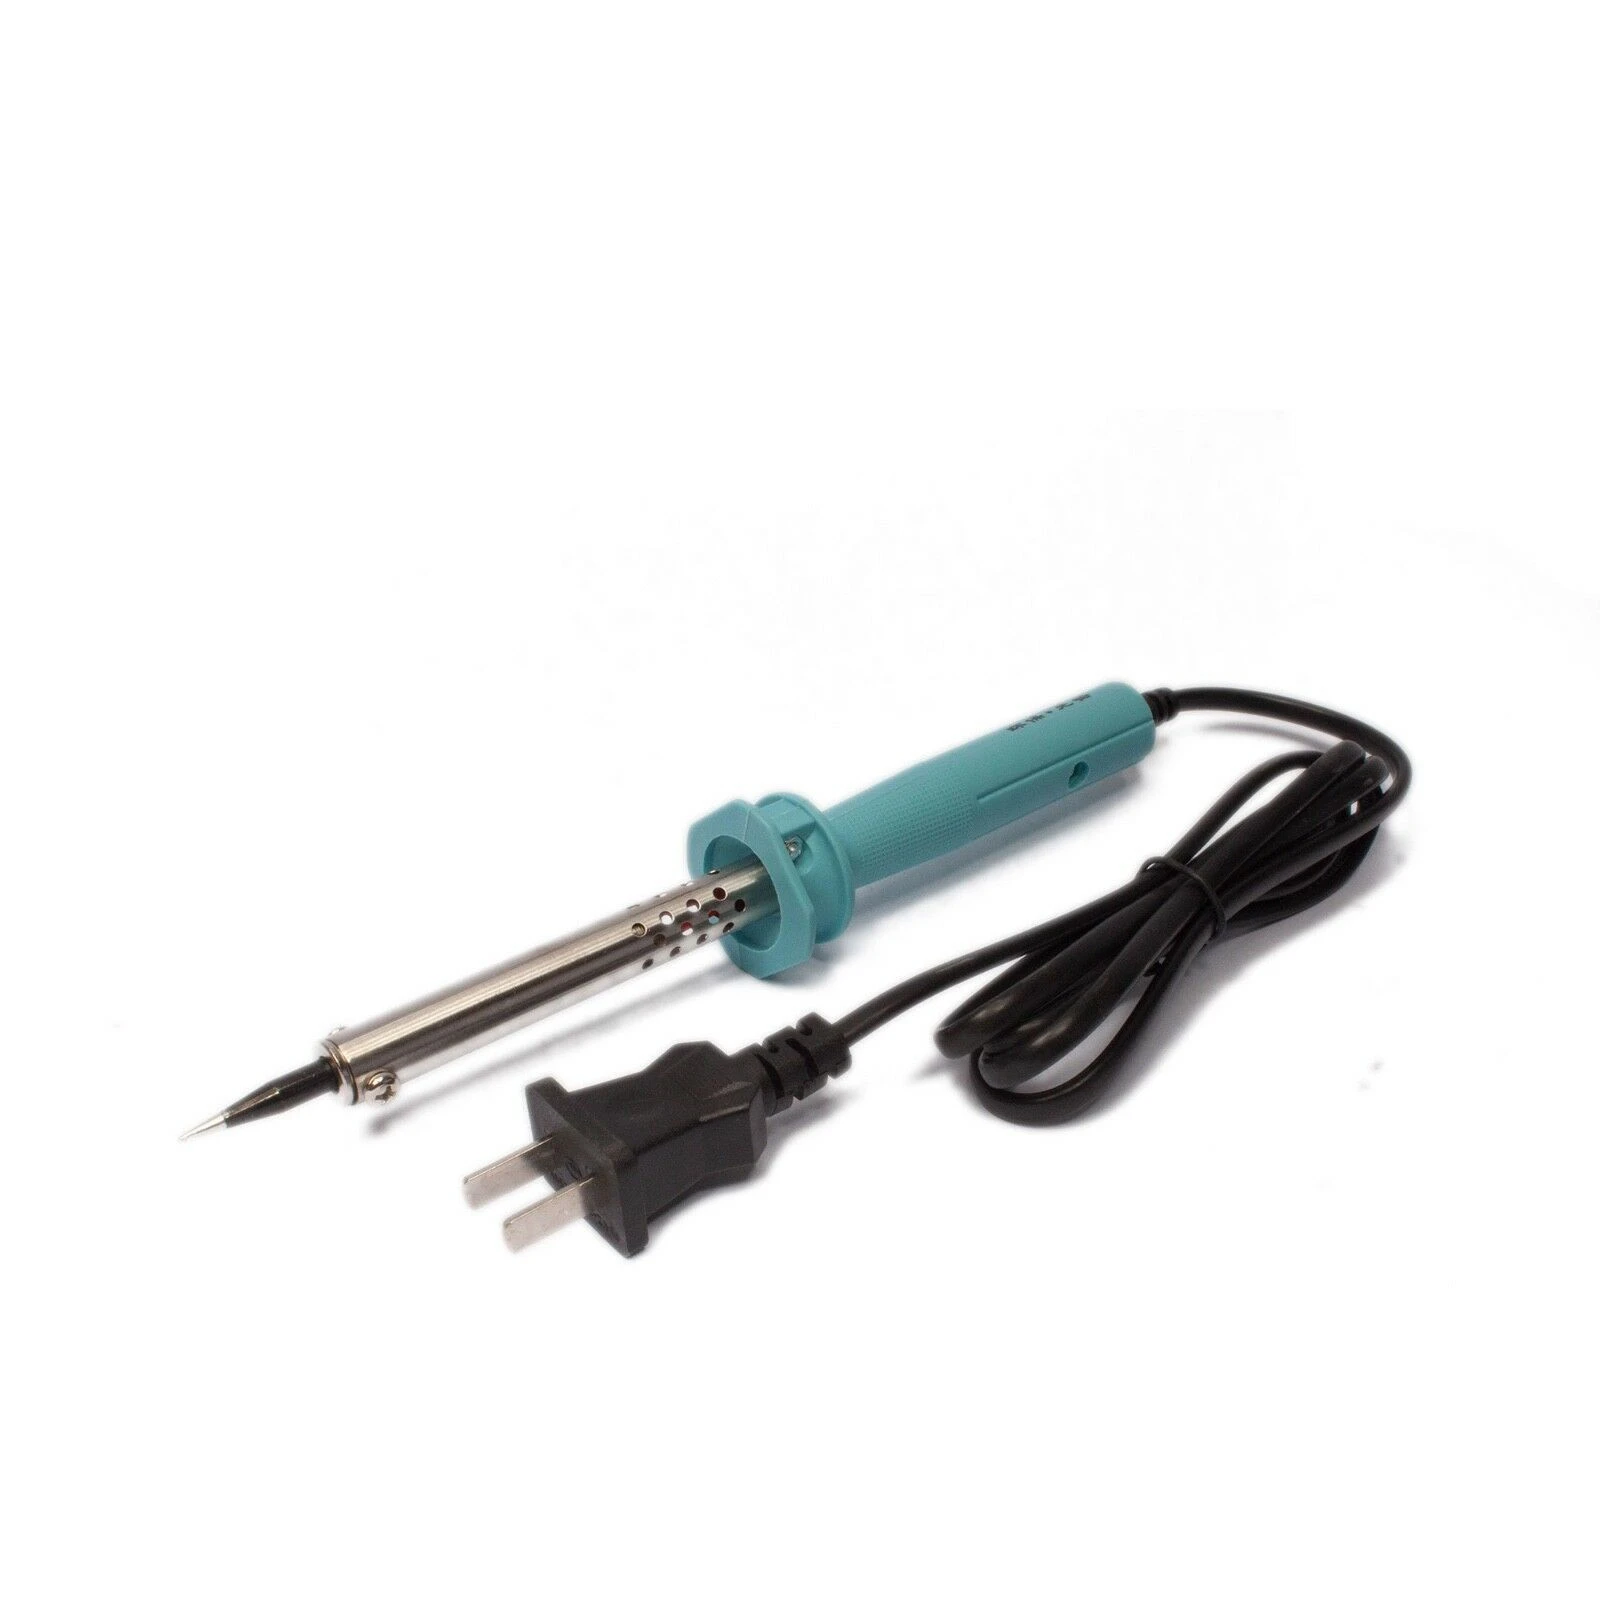 BEST 802 110v 60W Electronic Solder Soldering Iron Welding Heat Gun Pencil